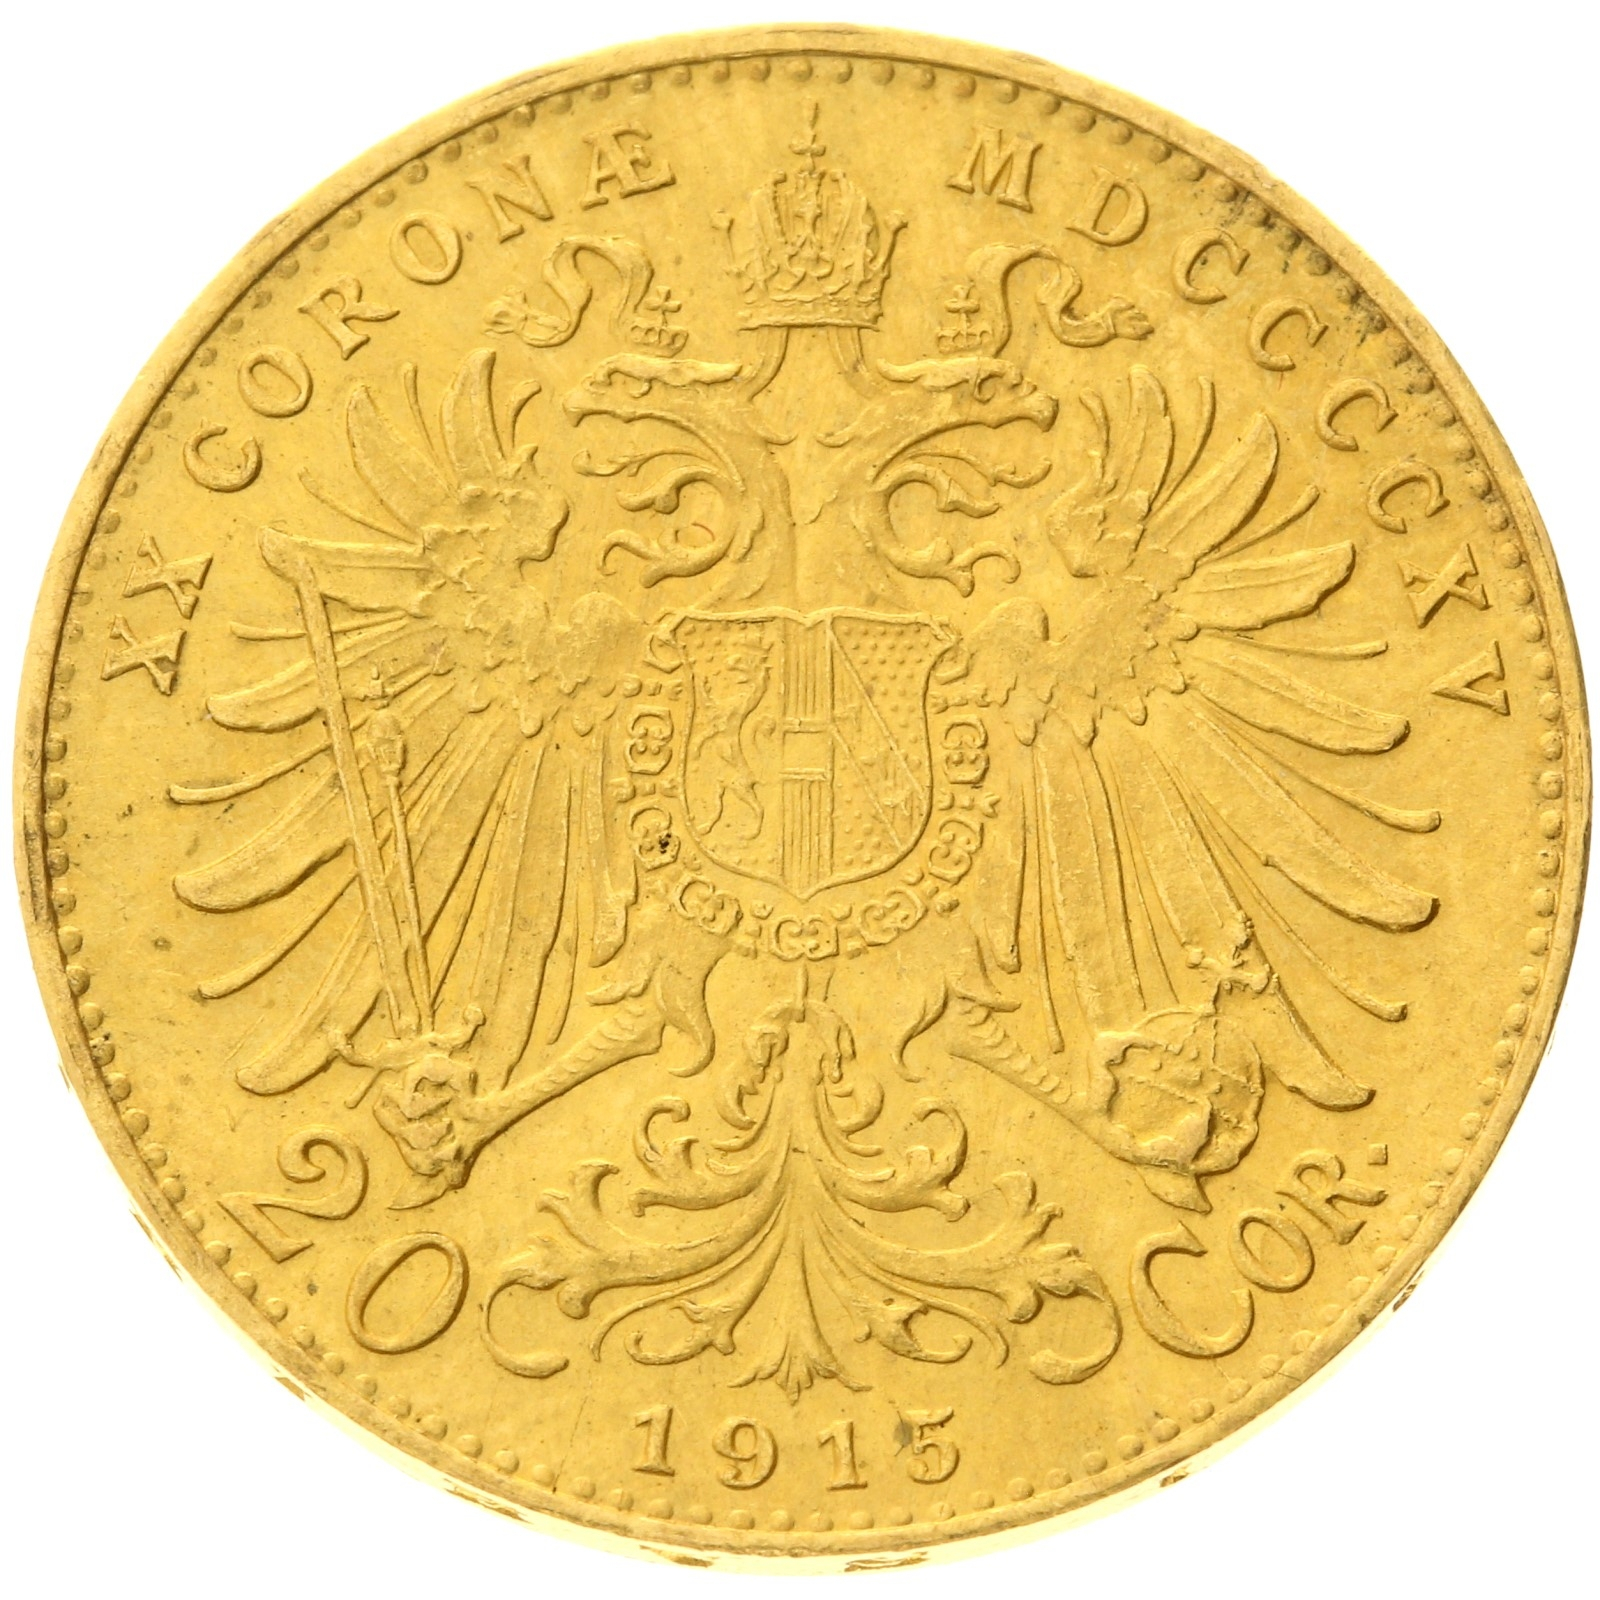 Austria -20 Corona - 1915 - Franz Joseph I - RESTRIKE